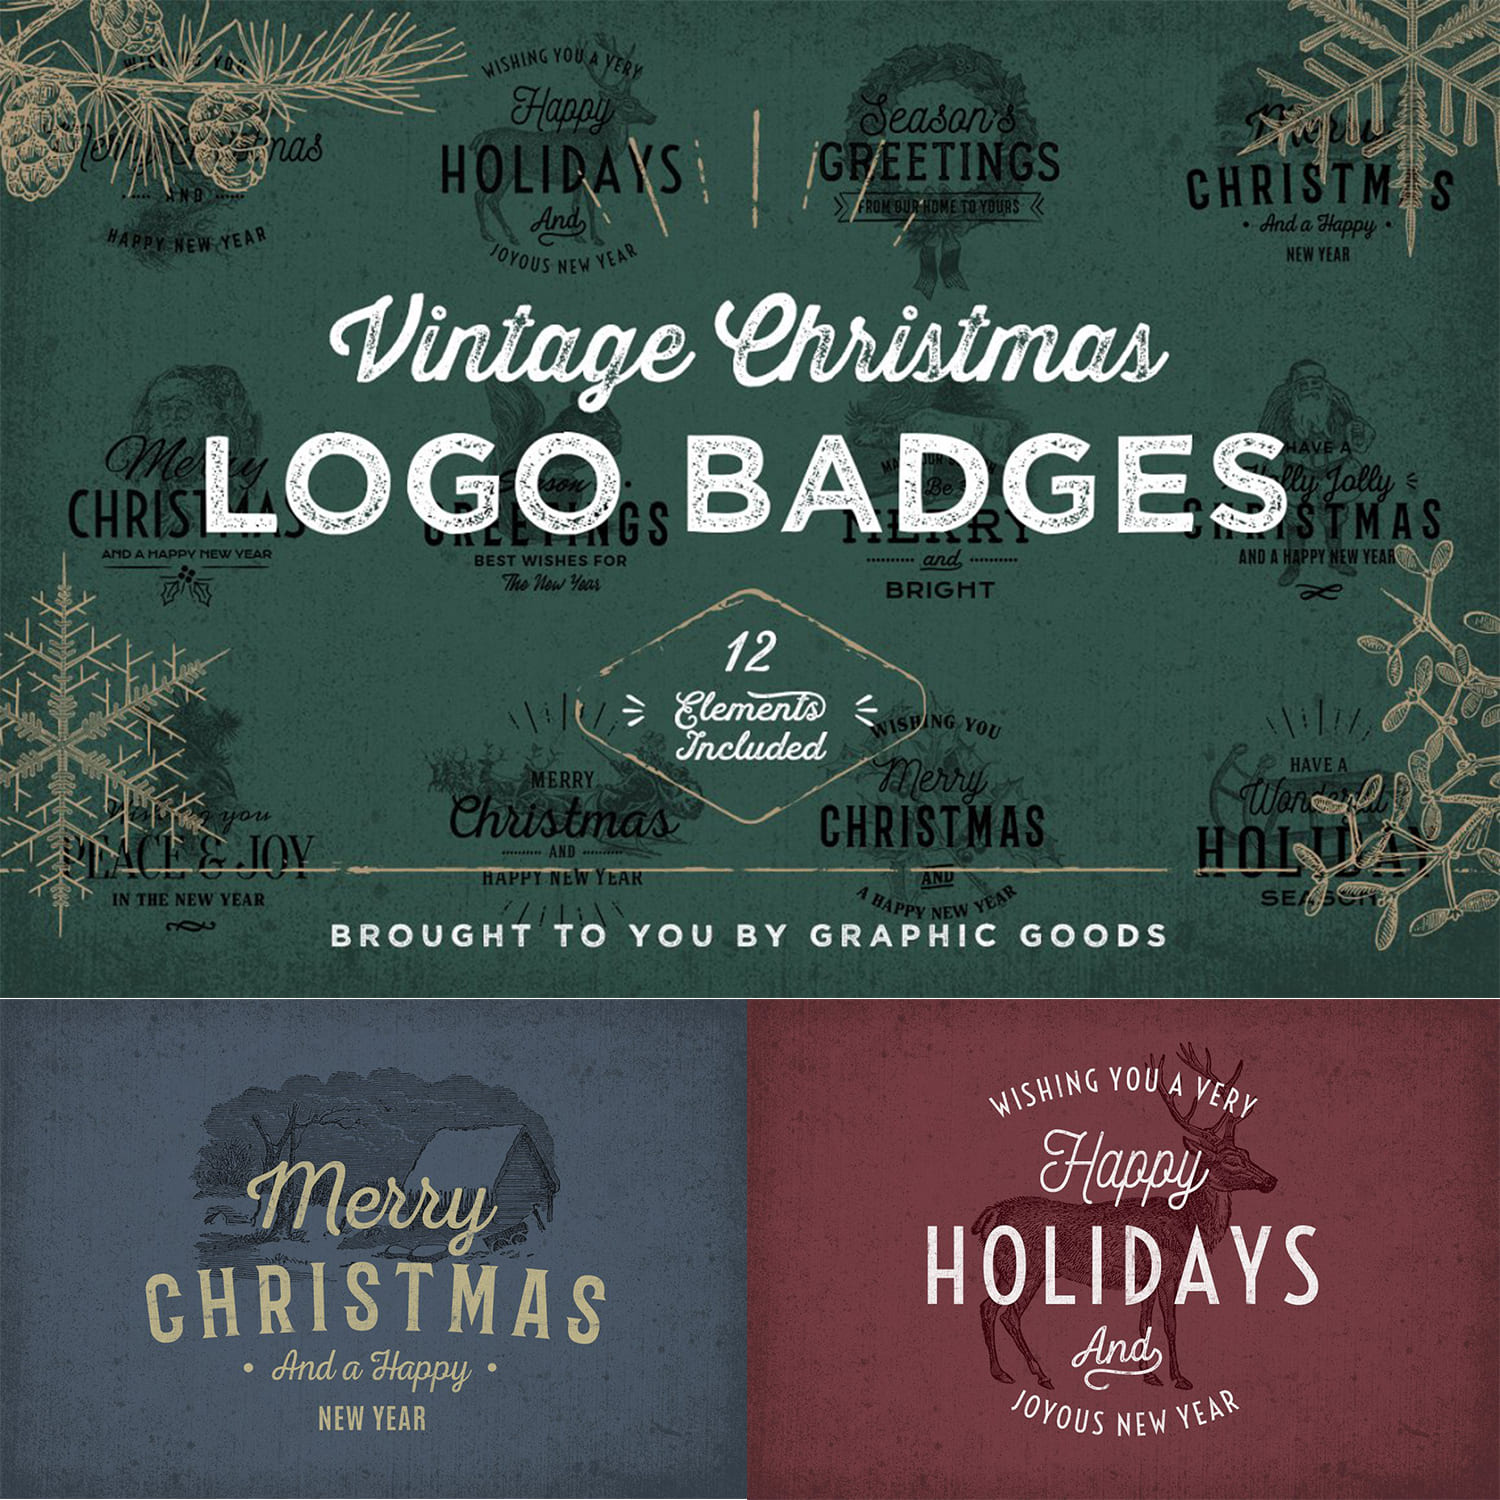 Vintage Christmas Logo Badges cover image.